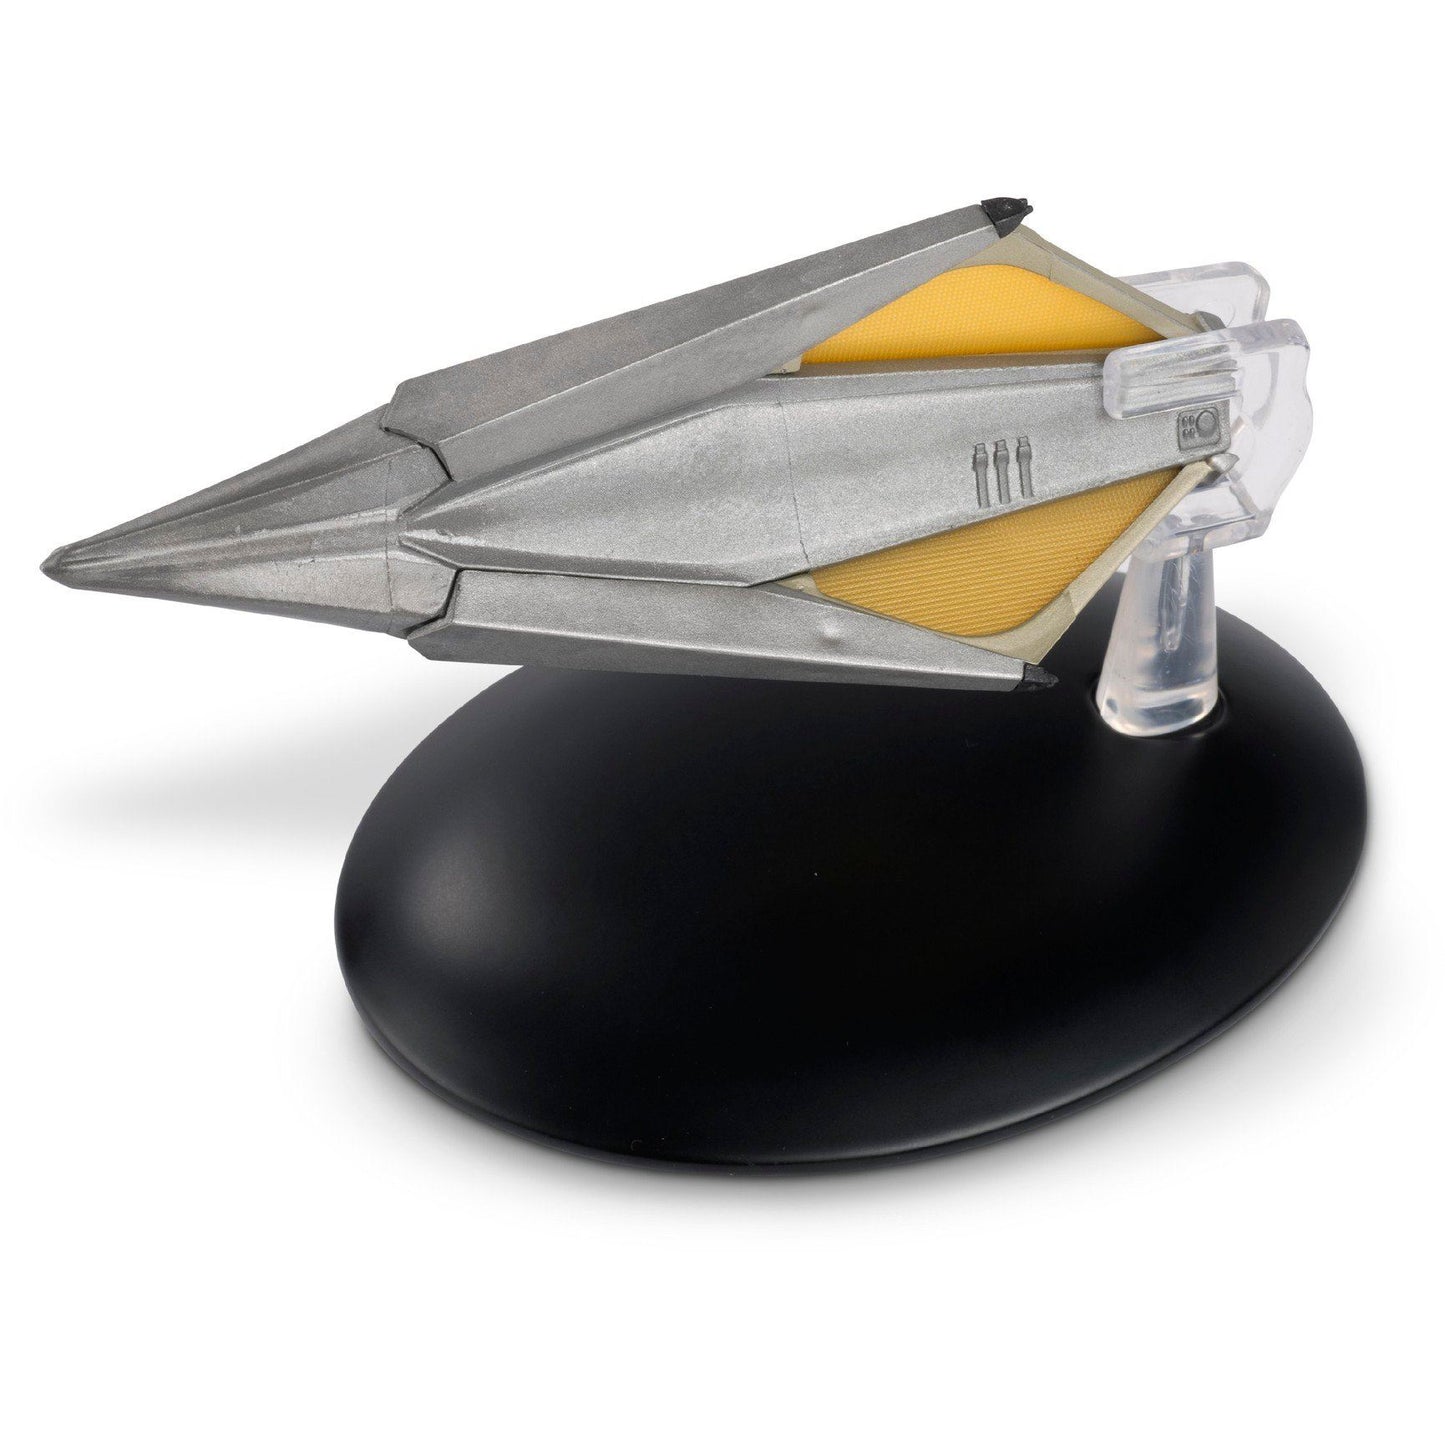 #129 Tholian Ship (2268) Model Die Cast Ship (Star Trek)